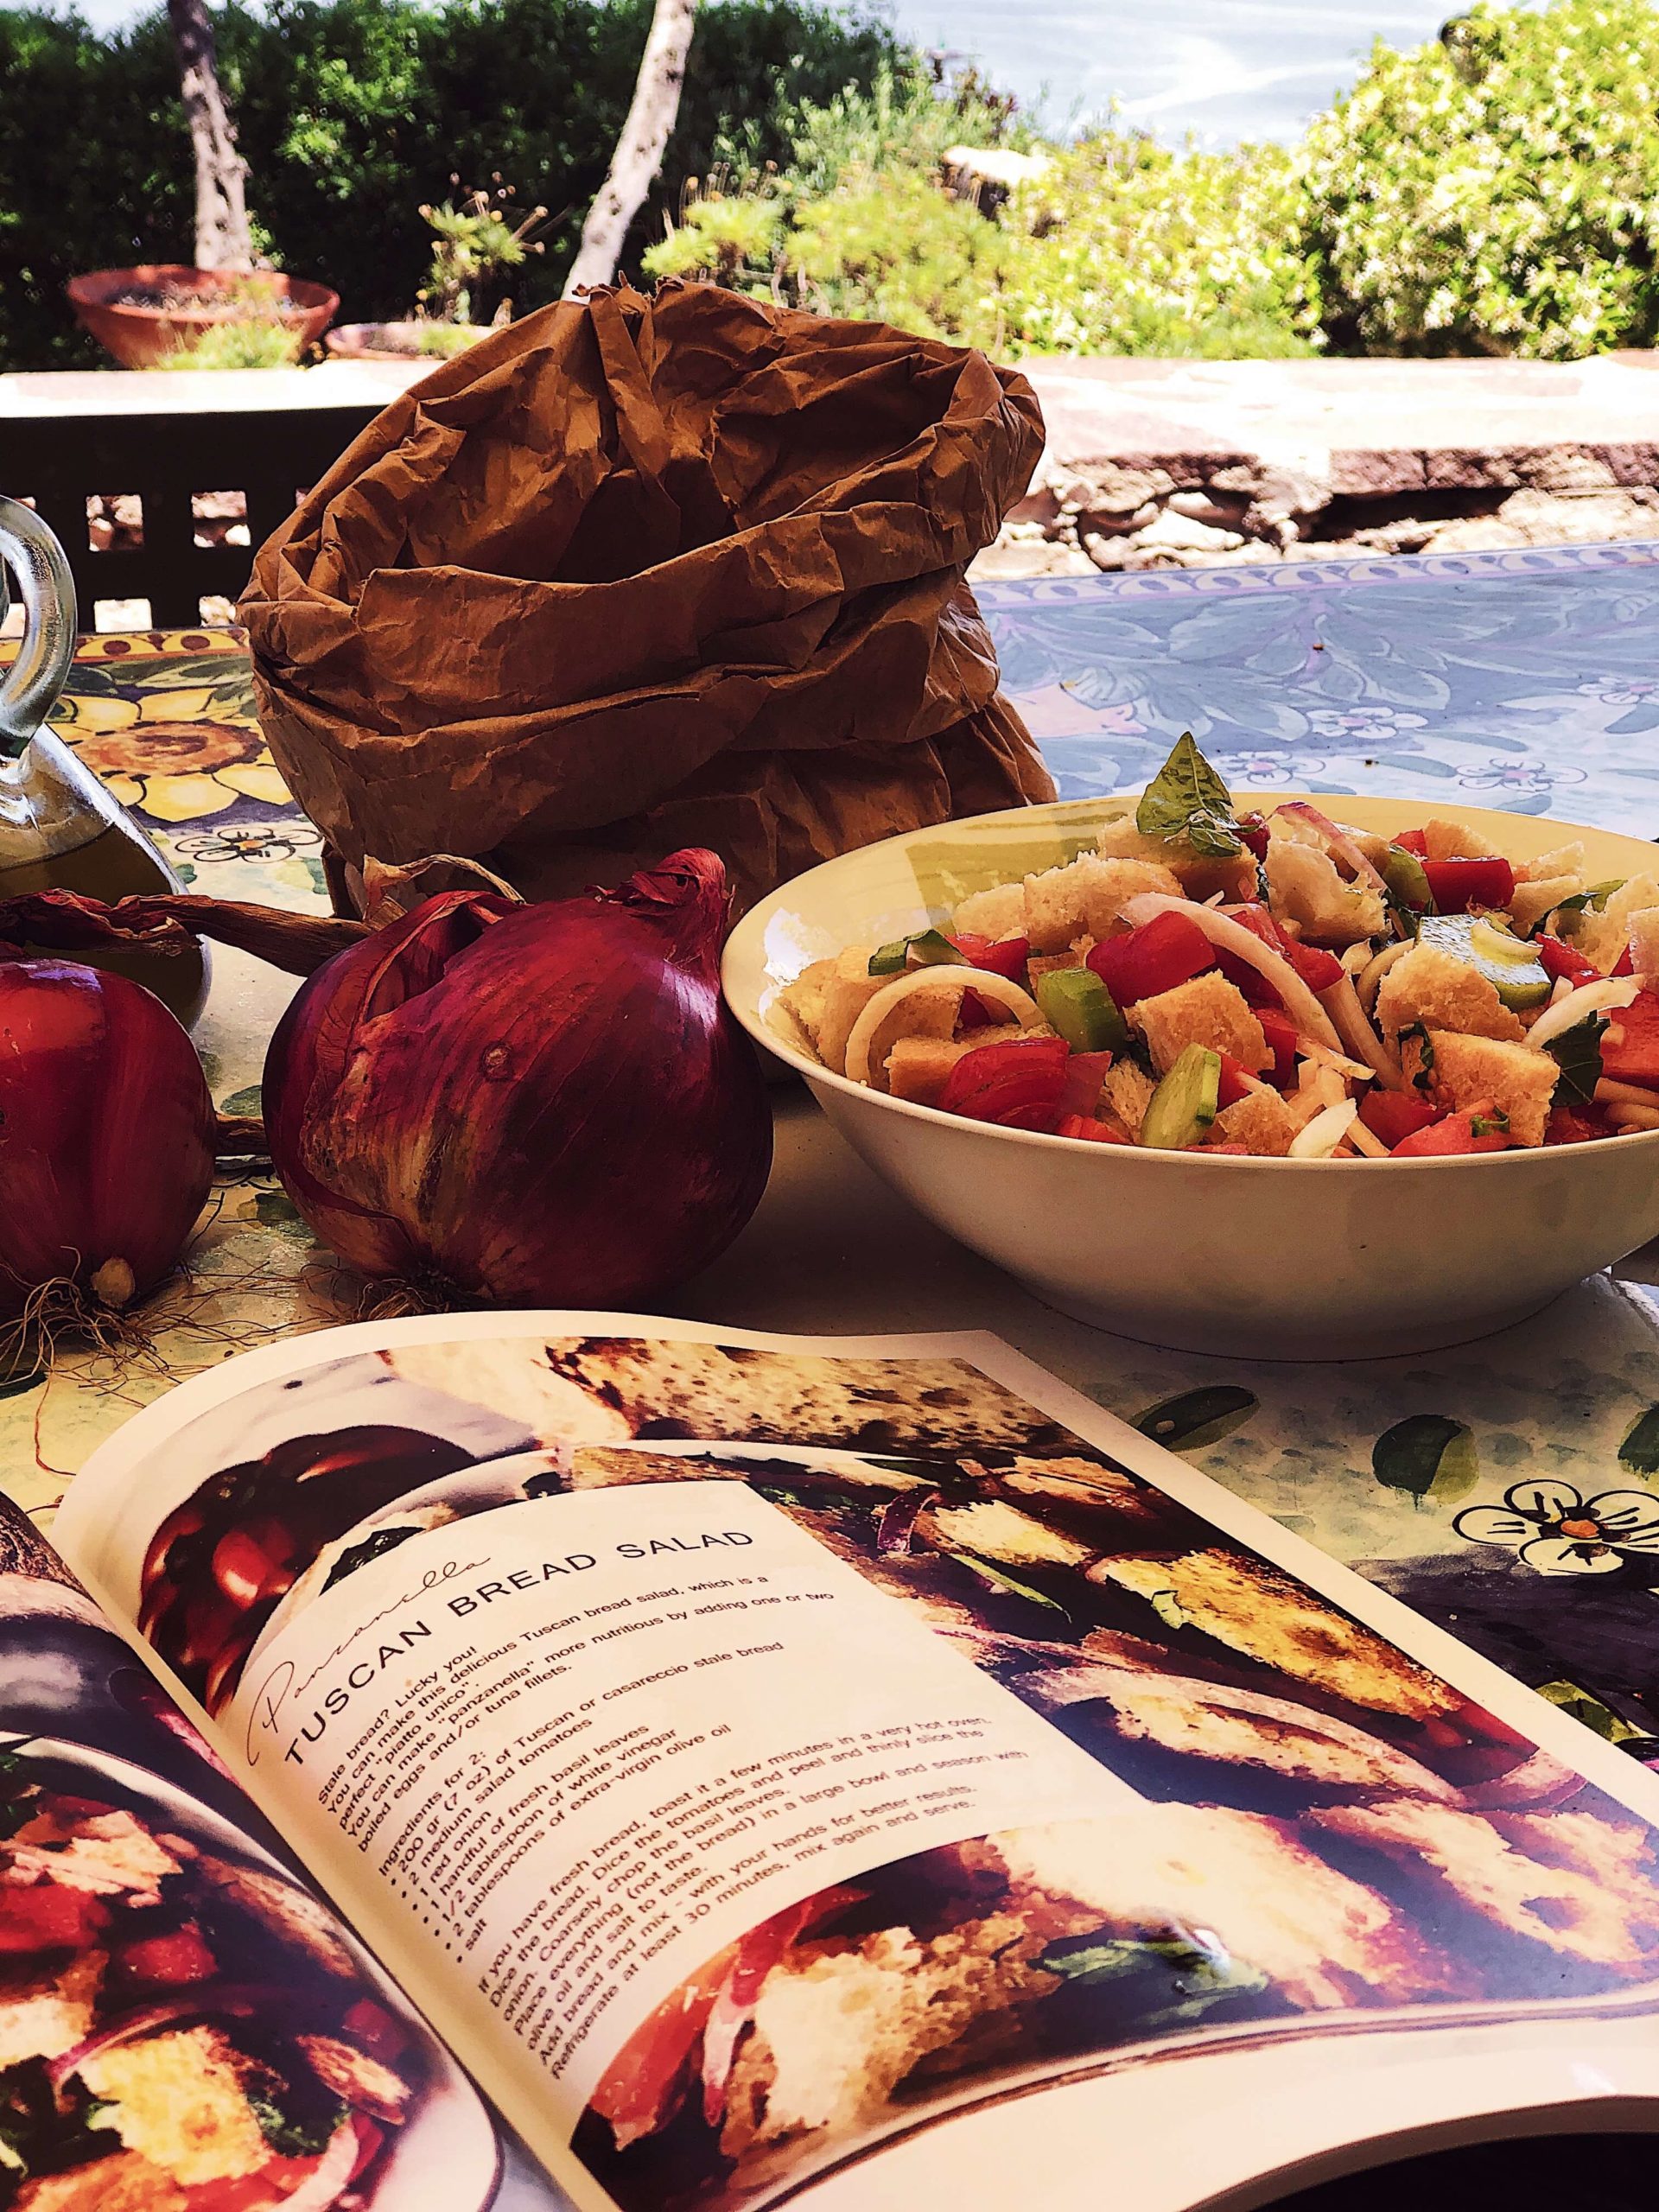 panzanella salad in a white bowl next to the Simposio Italian cooking magazine